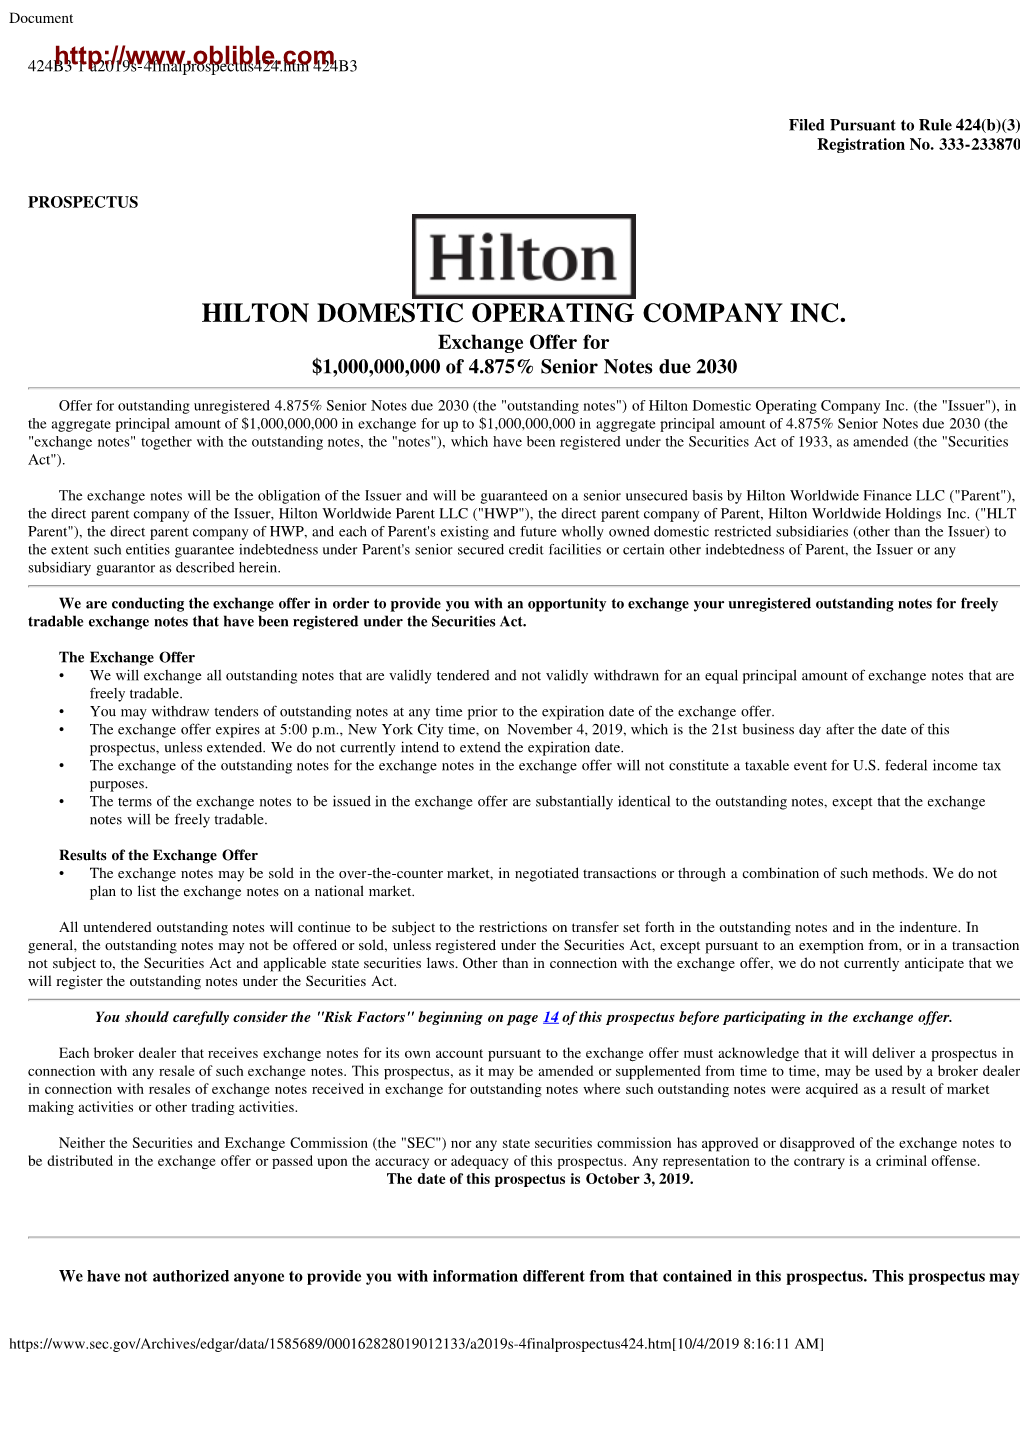 Prospectus Brochure of the Bond Hilton Domestic Operating